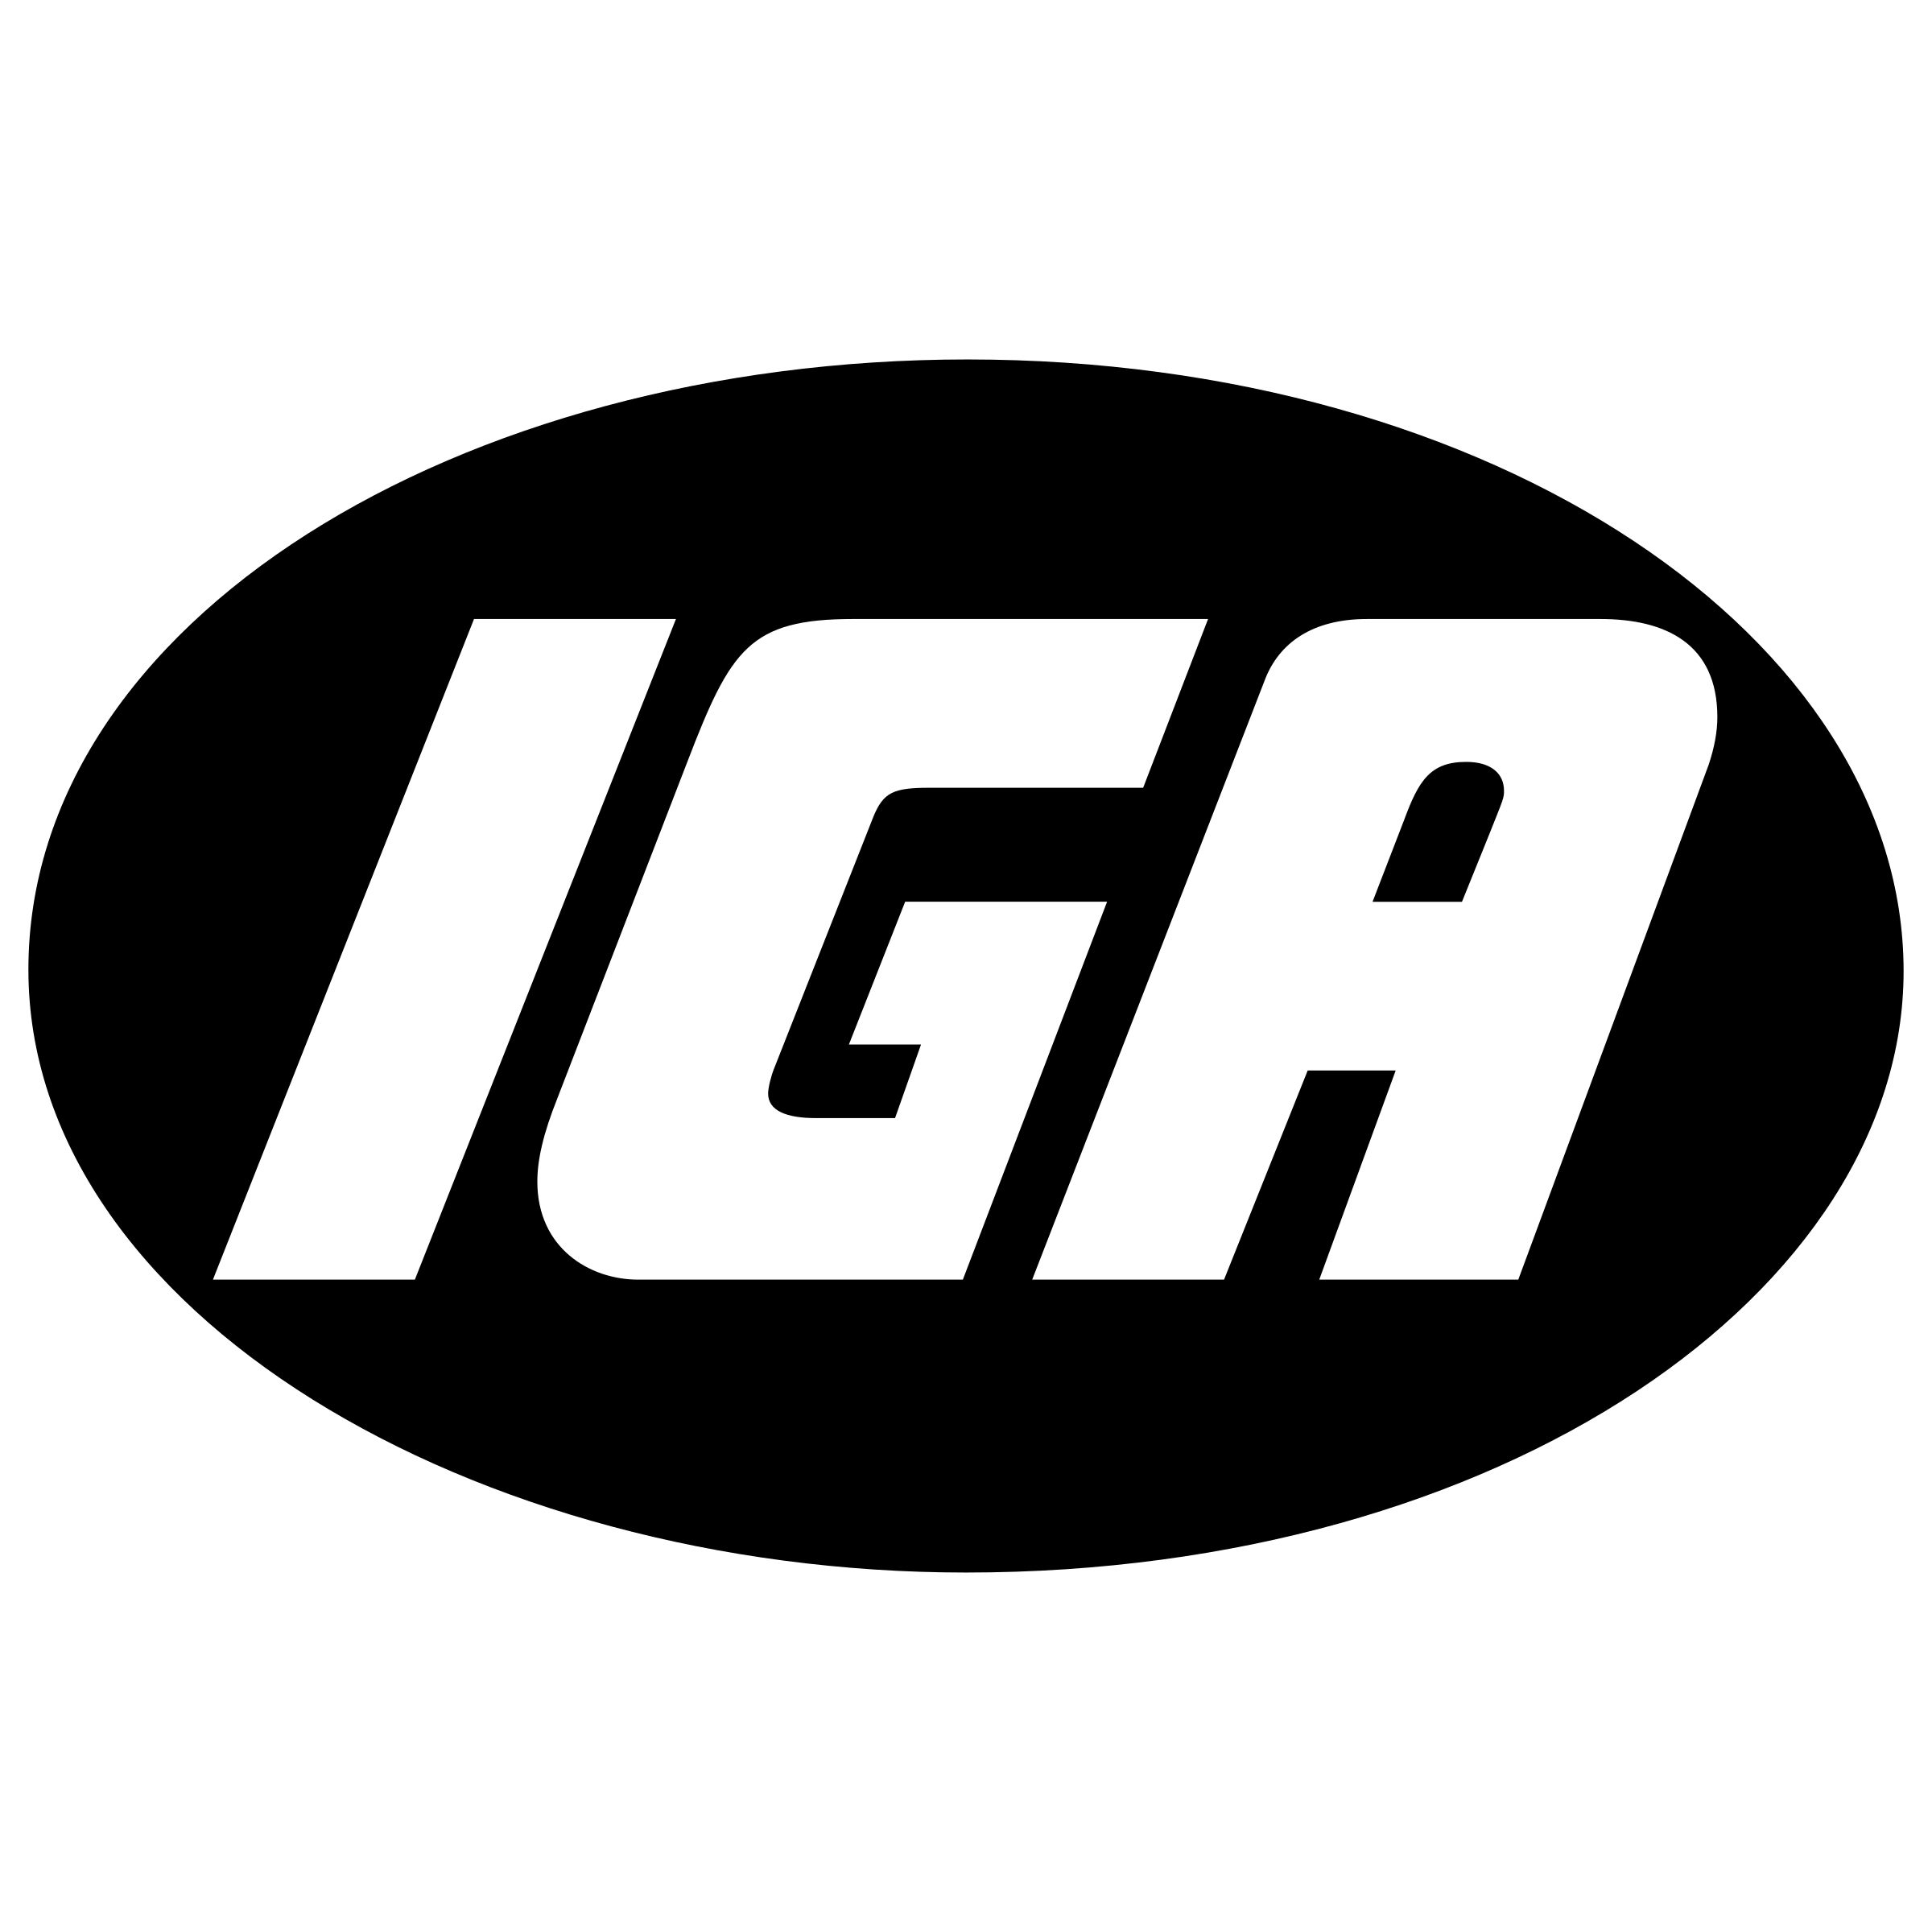 IGA Logo - IGA Logo PNG Transparent & SVG Vector - Freebie Supply